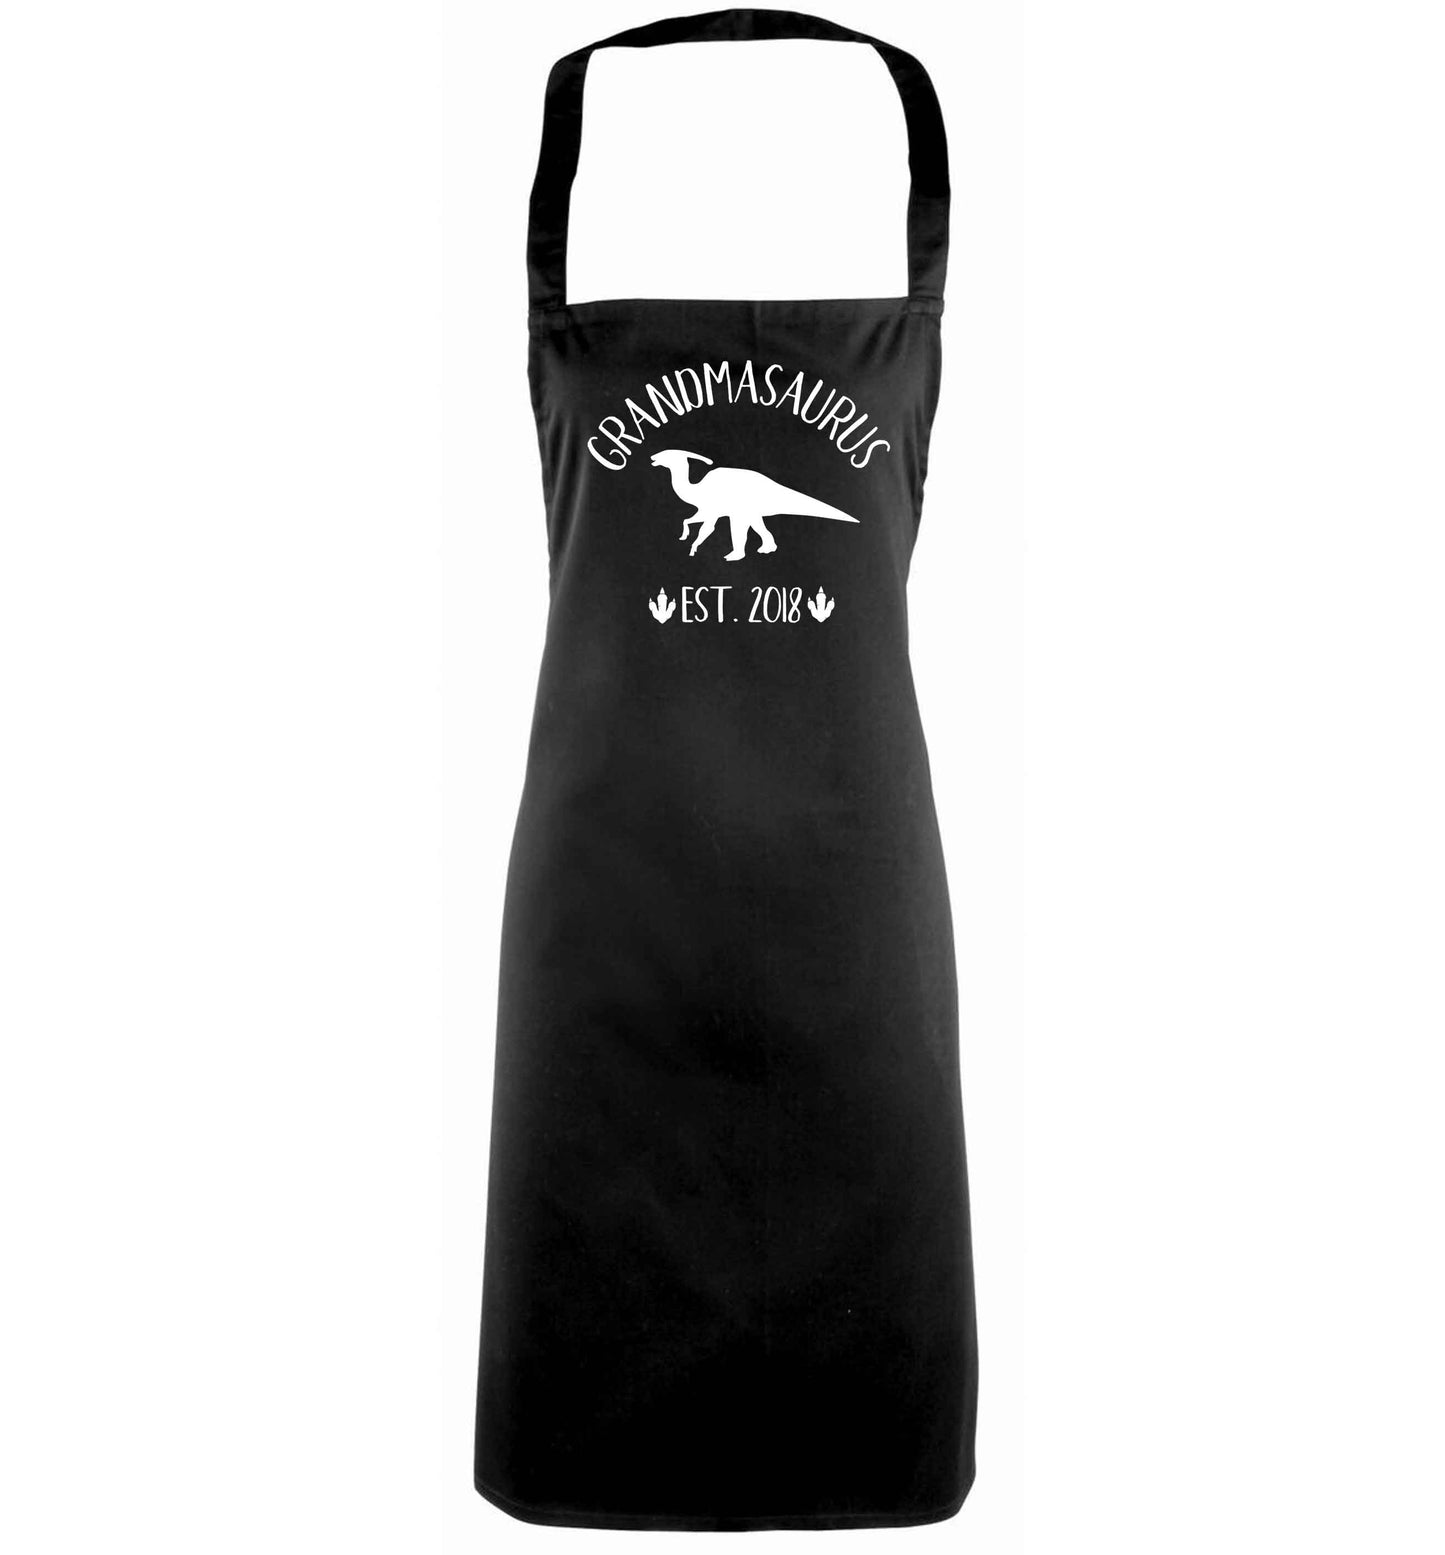 Personalised grandmasaurus since (custom date) black apron